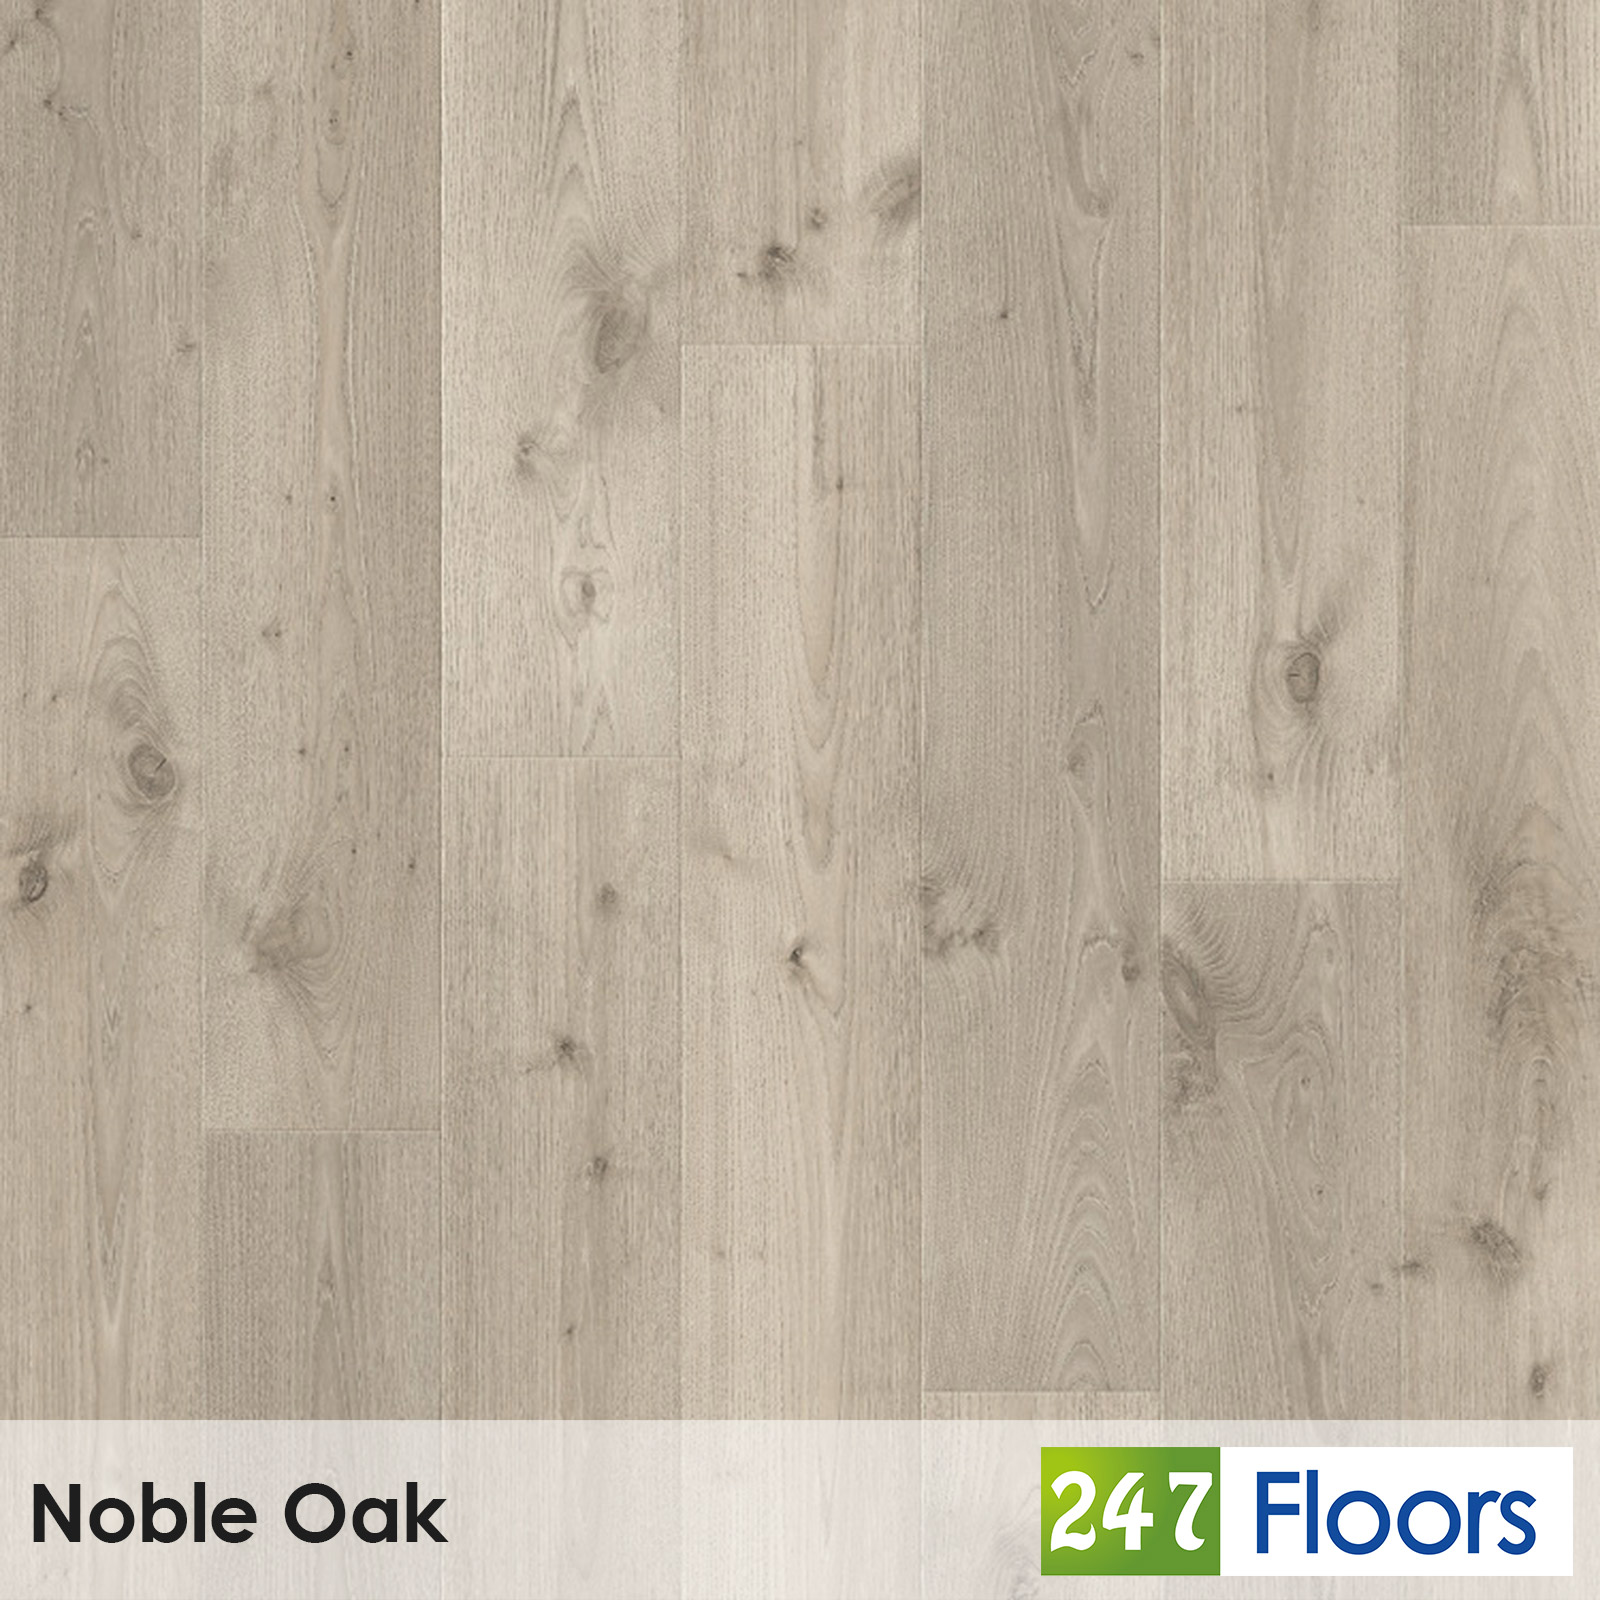 Diy Materials Royal Oak 61012 Balterio, What Is The Hardest Wearing Laminate Flooring